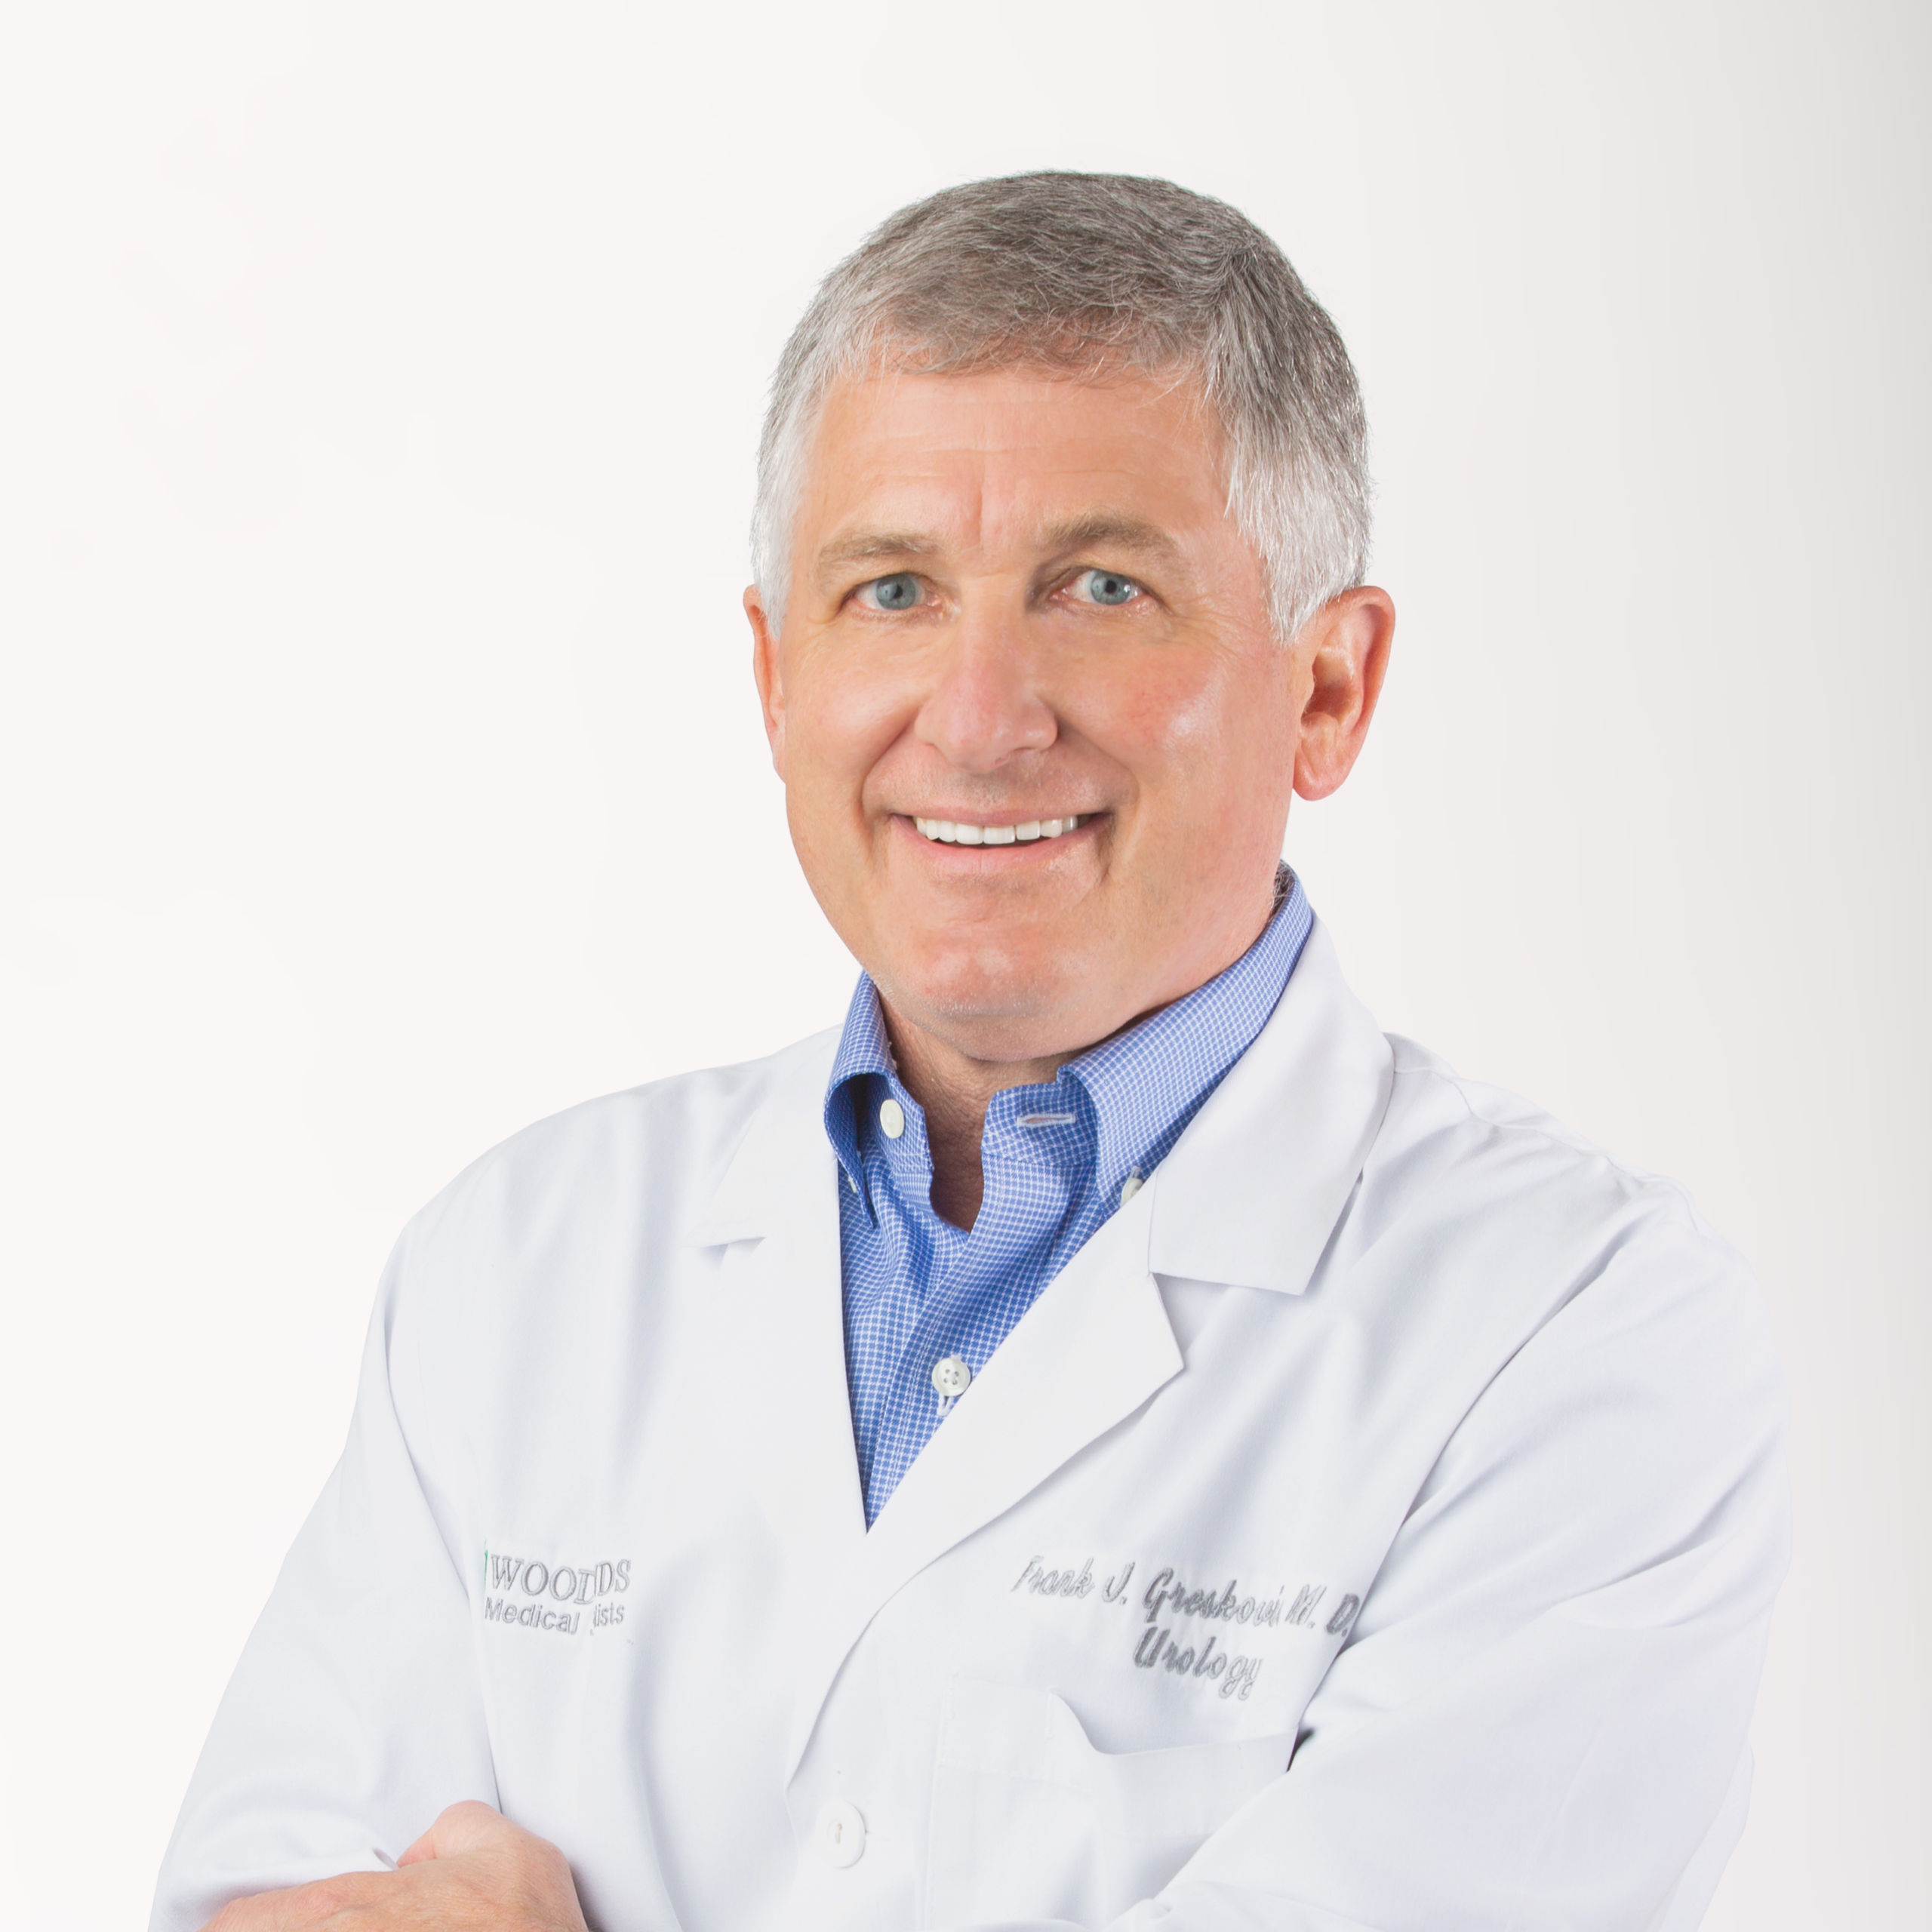 Woodlands Medical Specialists Frank J. Greskovich, M.D.